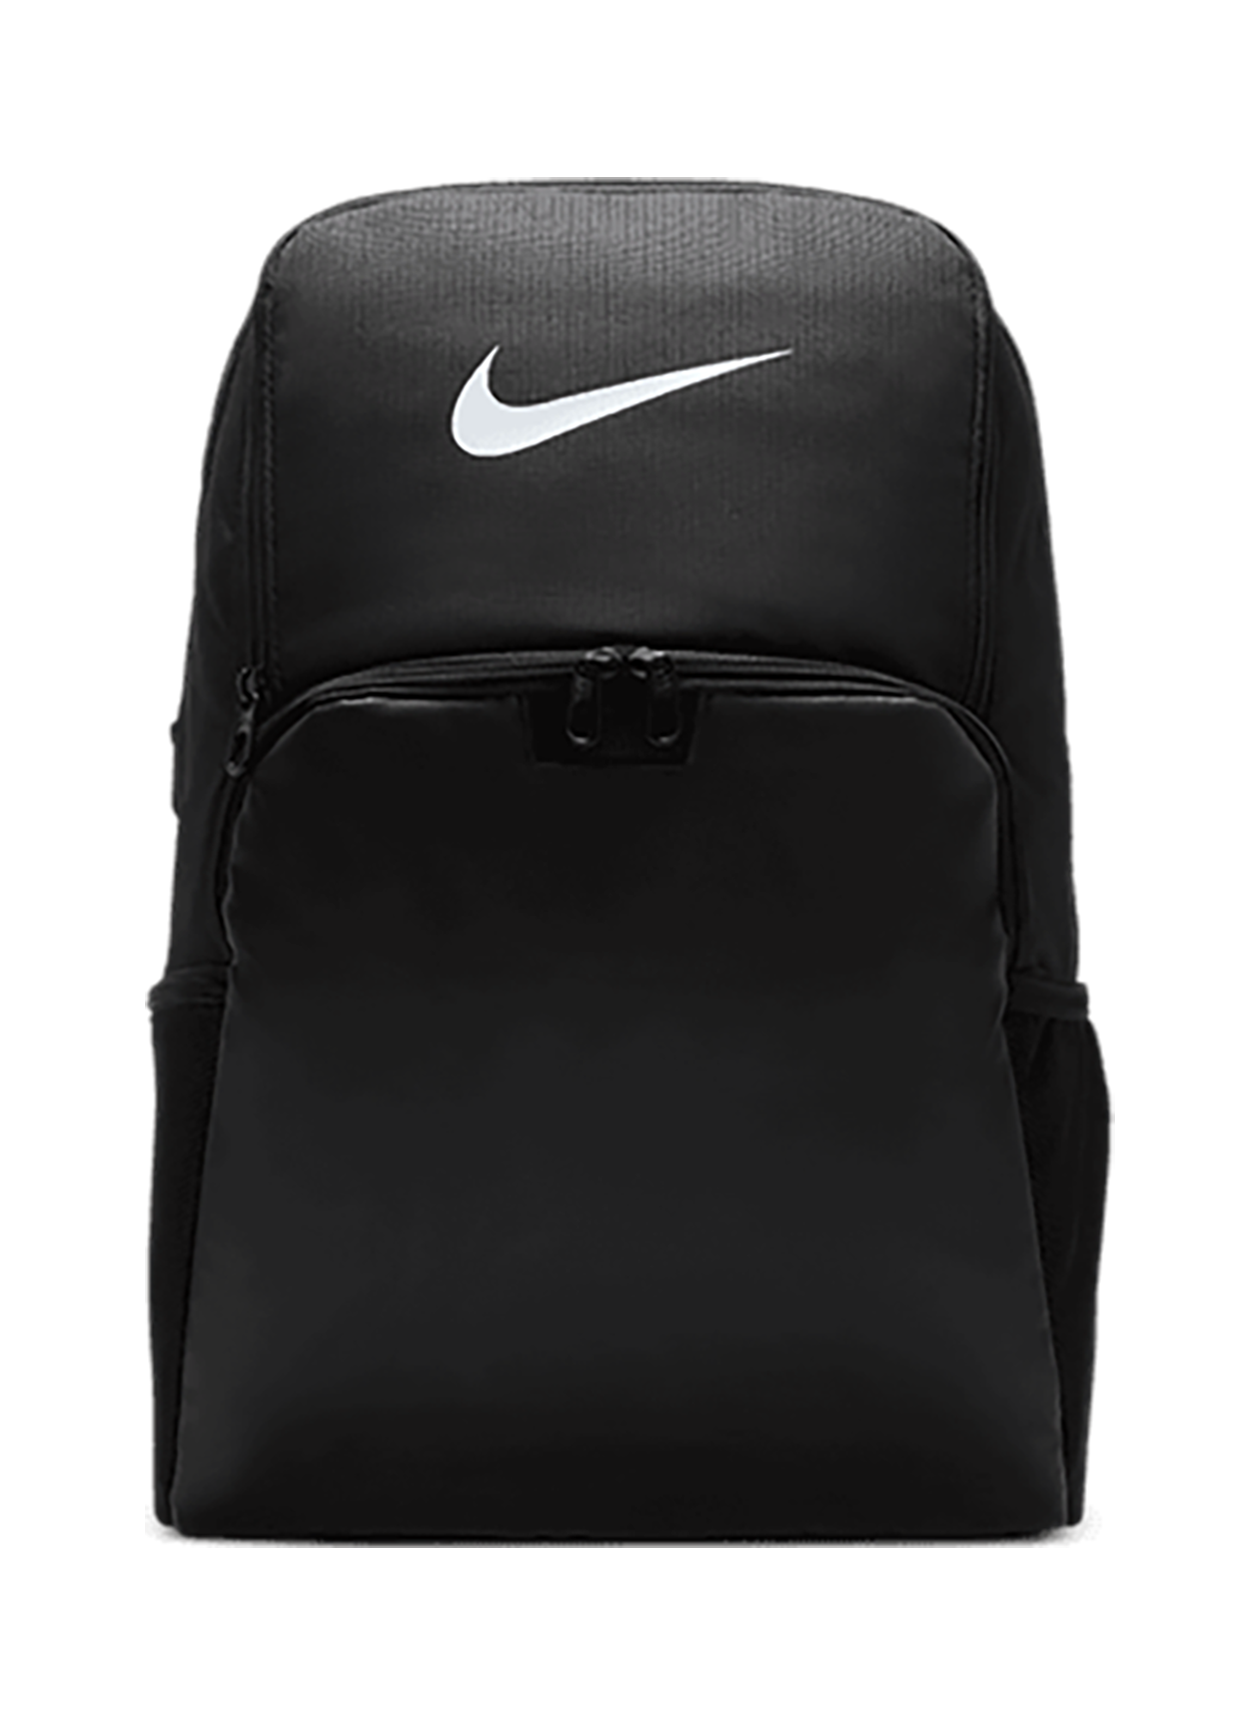 Nike Brasilia 9.5 Backpack Black / White